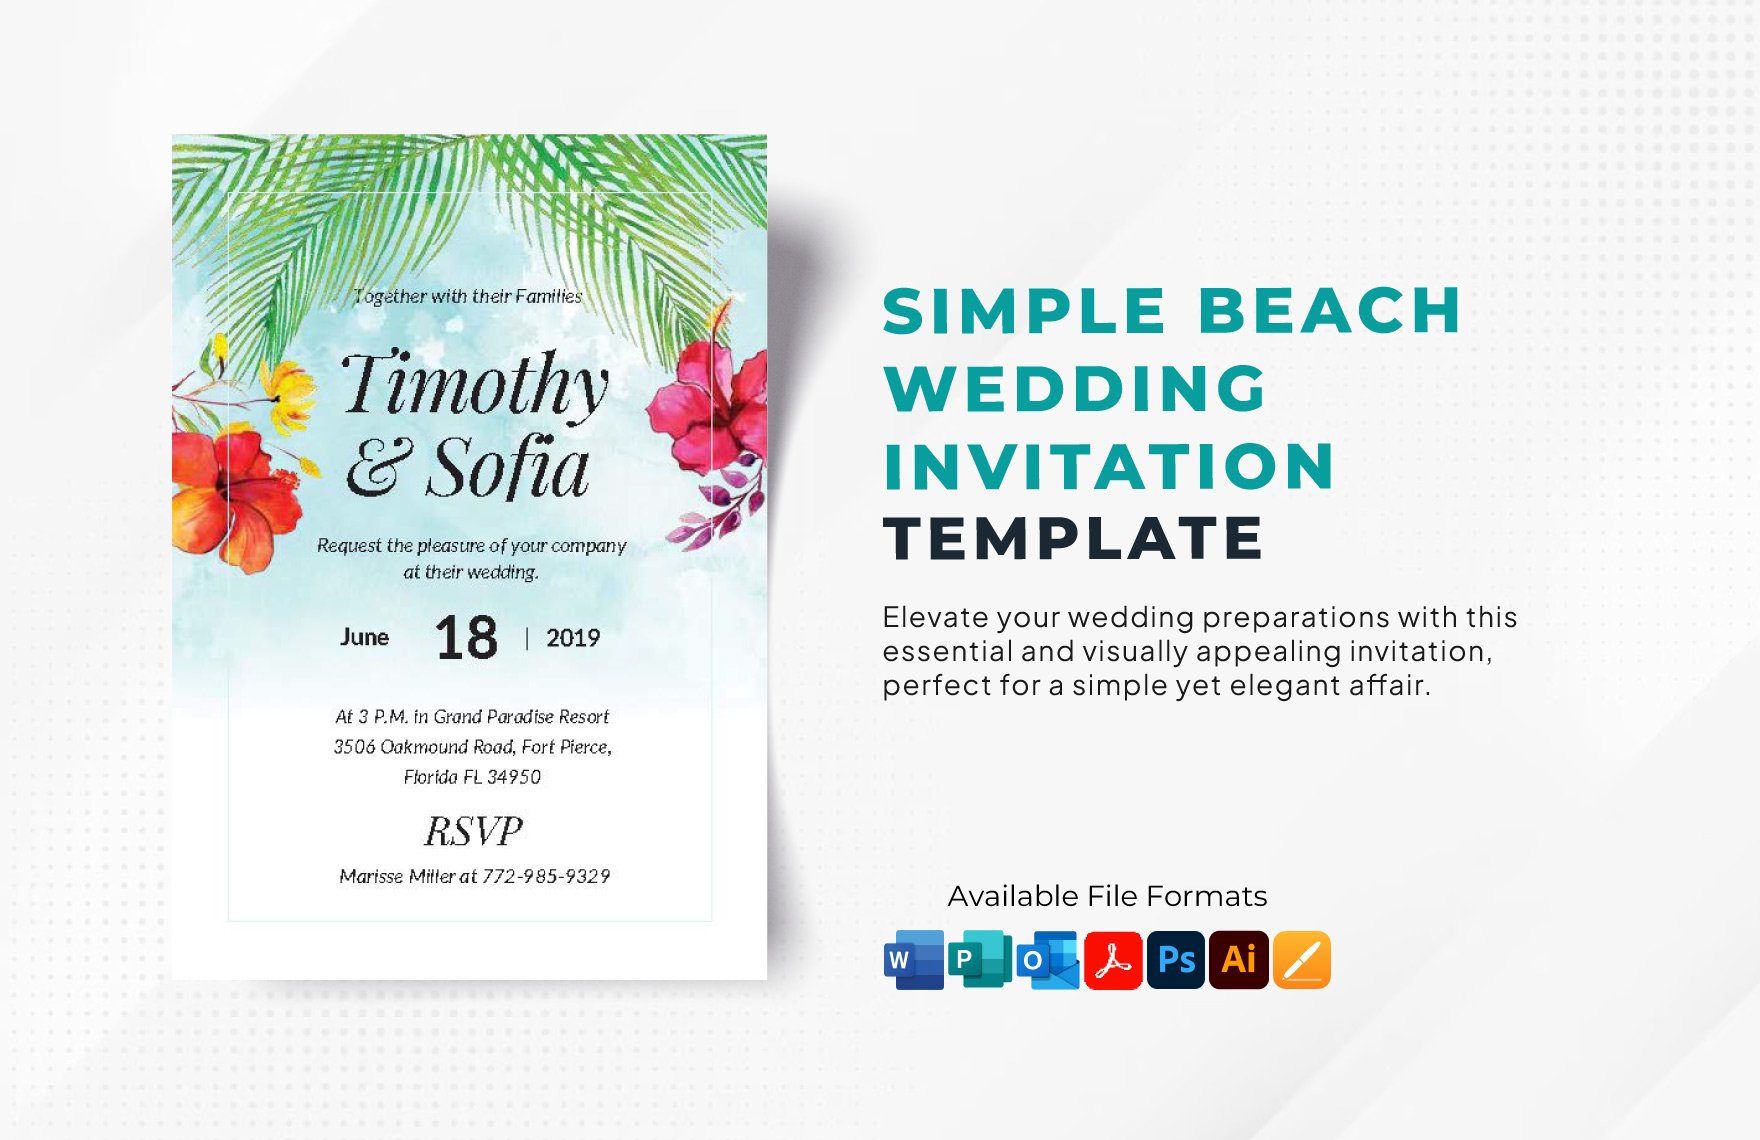 Simple Beach Wedding Invitation Template